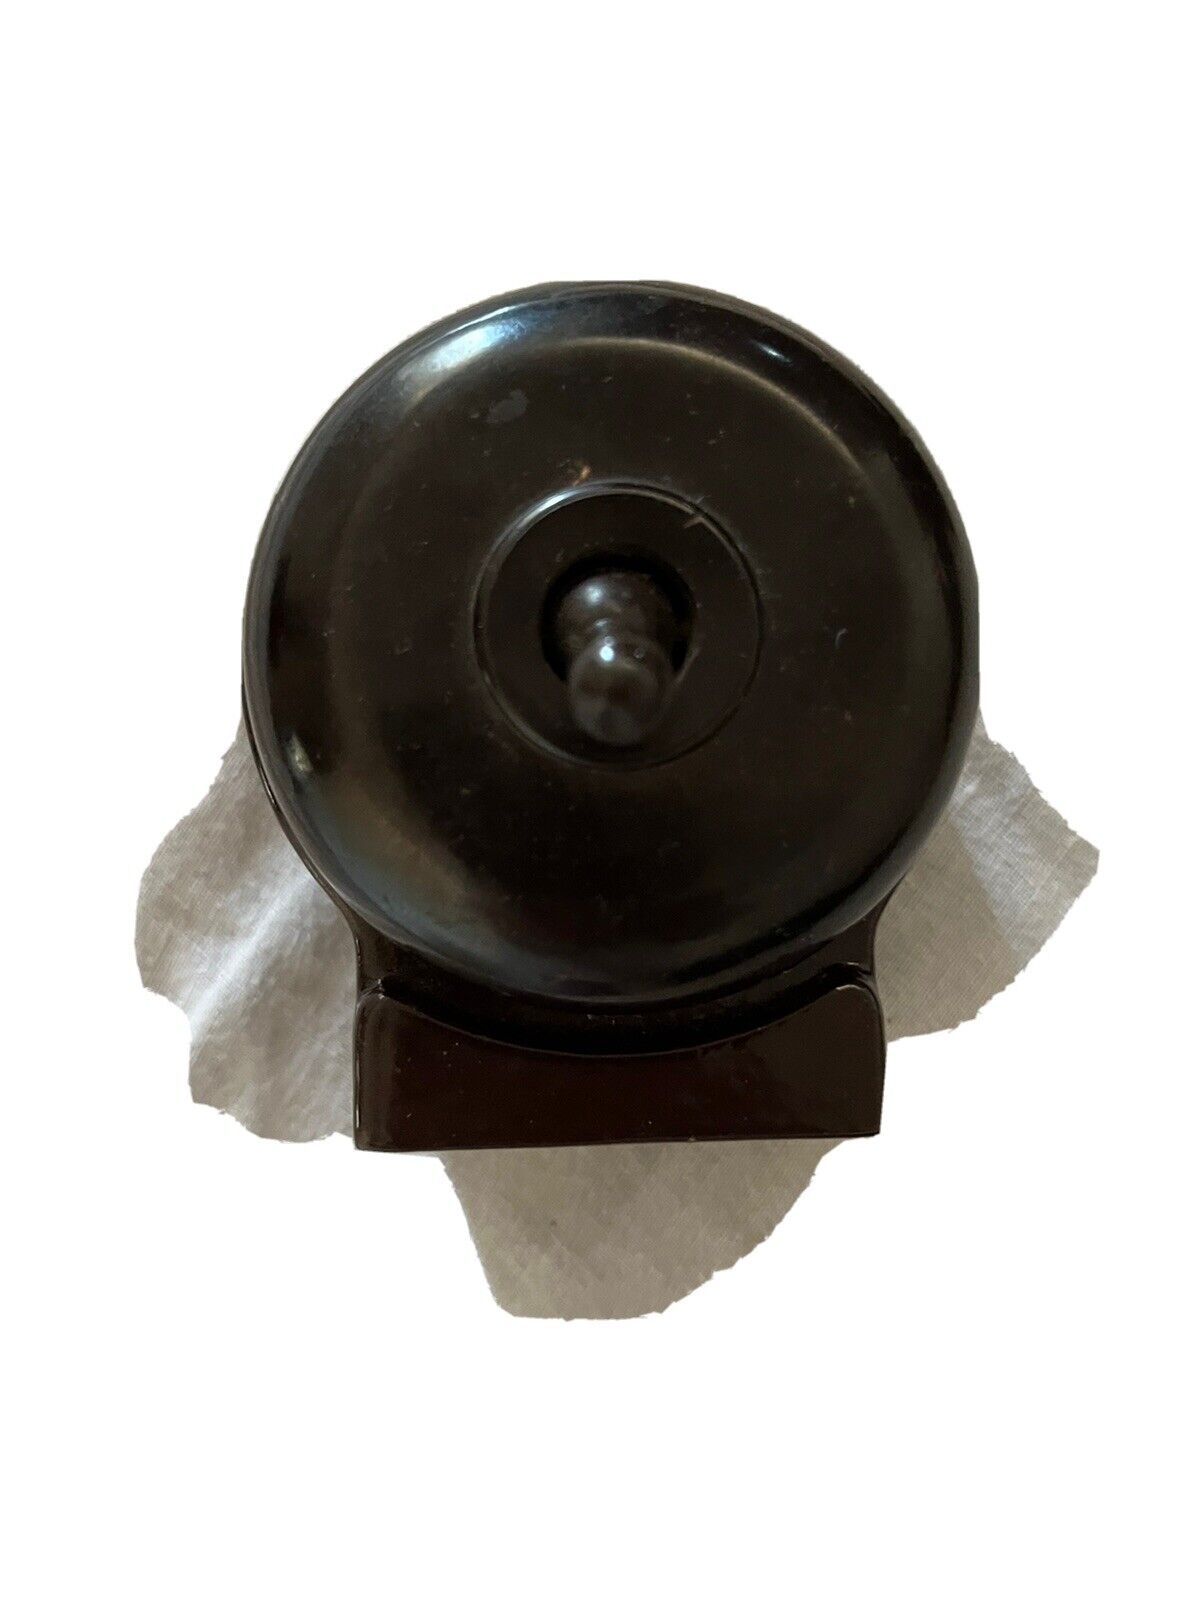 Vintage, Bakelite/Brown Porcelain light switch/Socket  untested used condition.